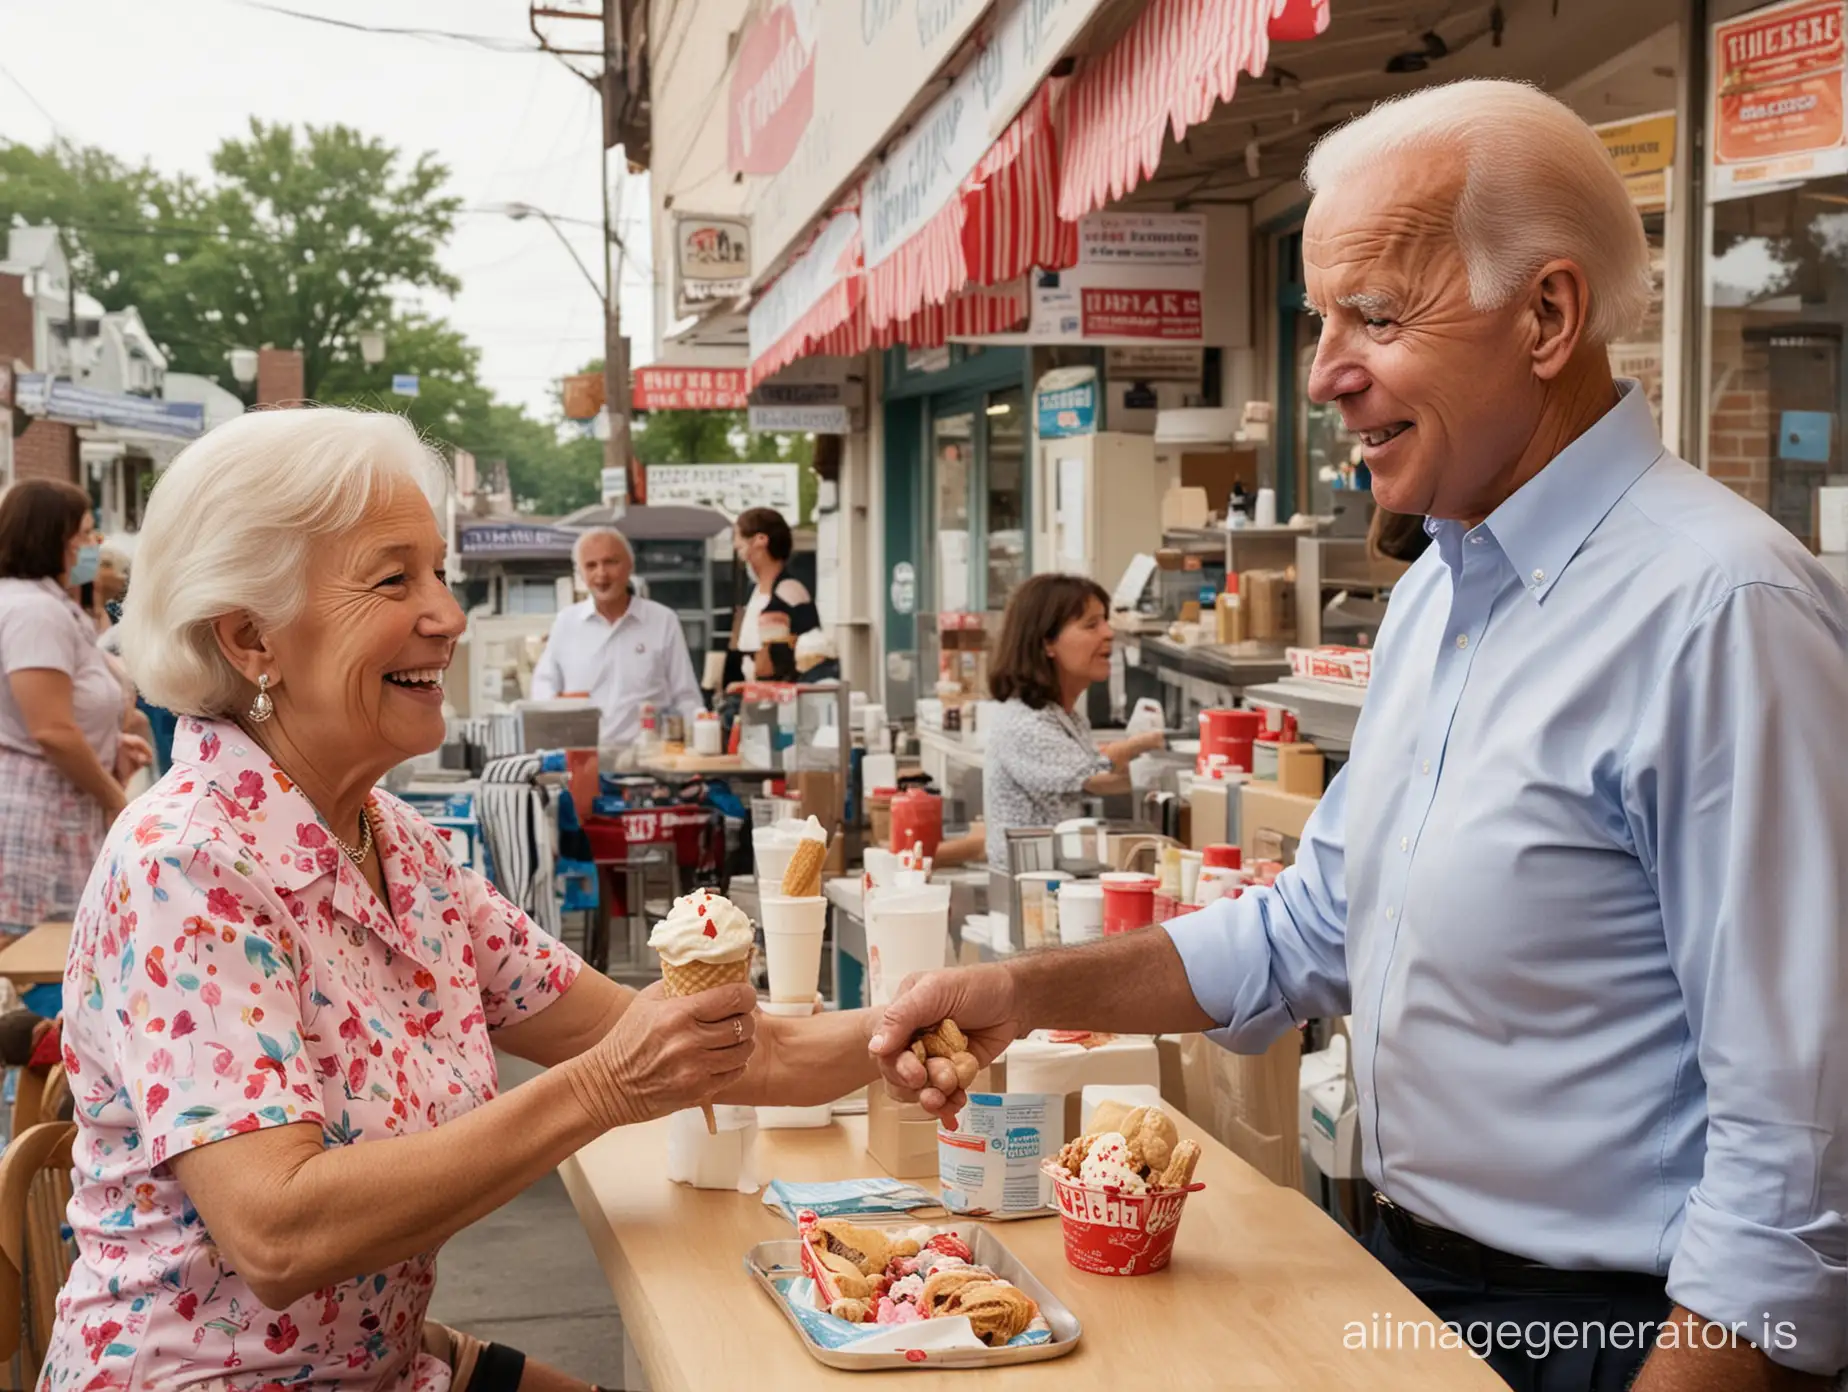 Joe-Biden-Serving-Ice-Cream-to-an-Elderly-Woman